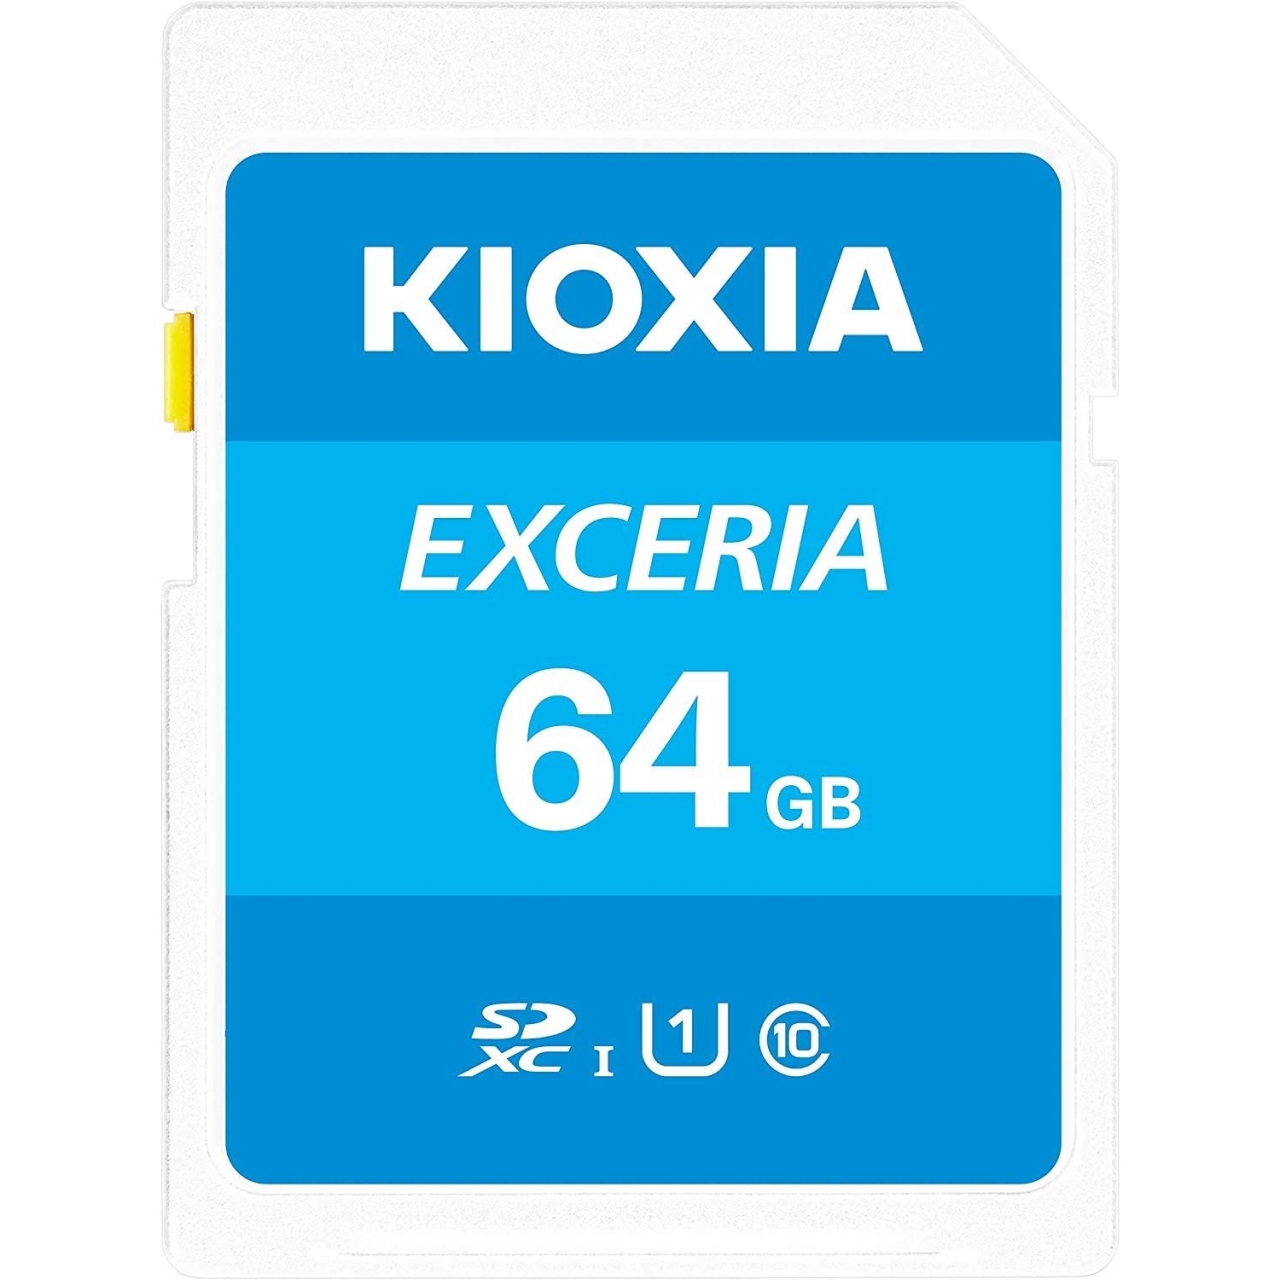 KIOXIA SDHC 64GB EXCERIA LNEX1L064GG4 Hafıza Kartı